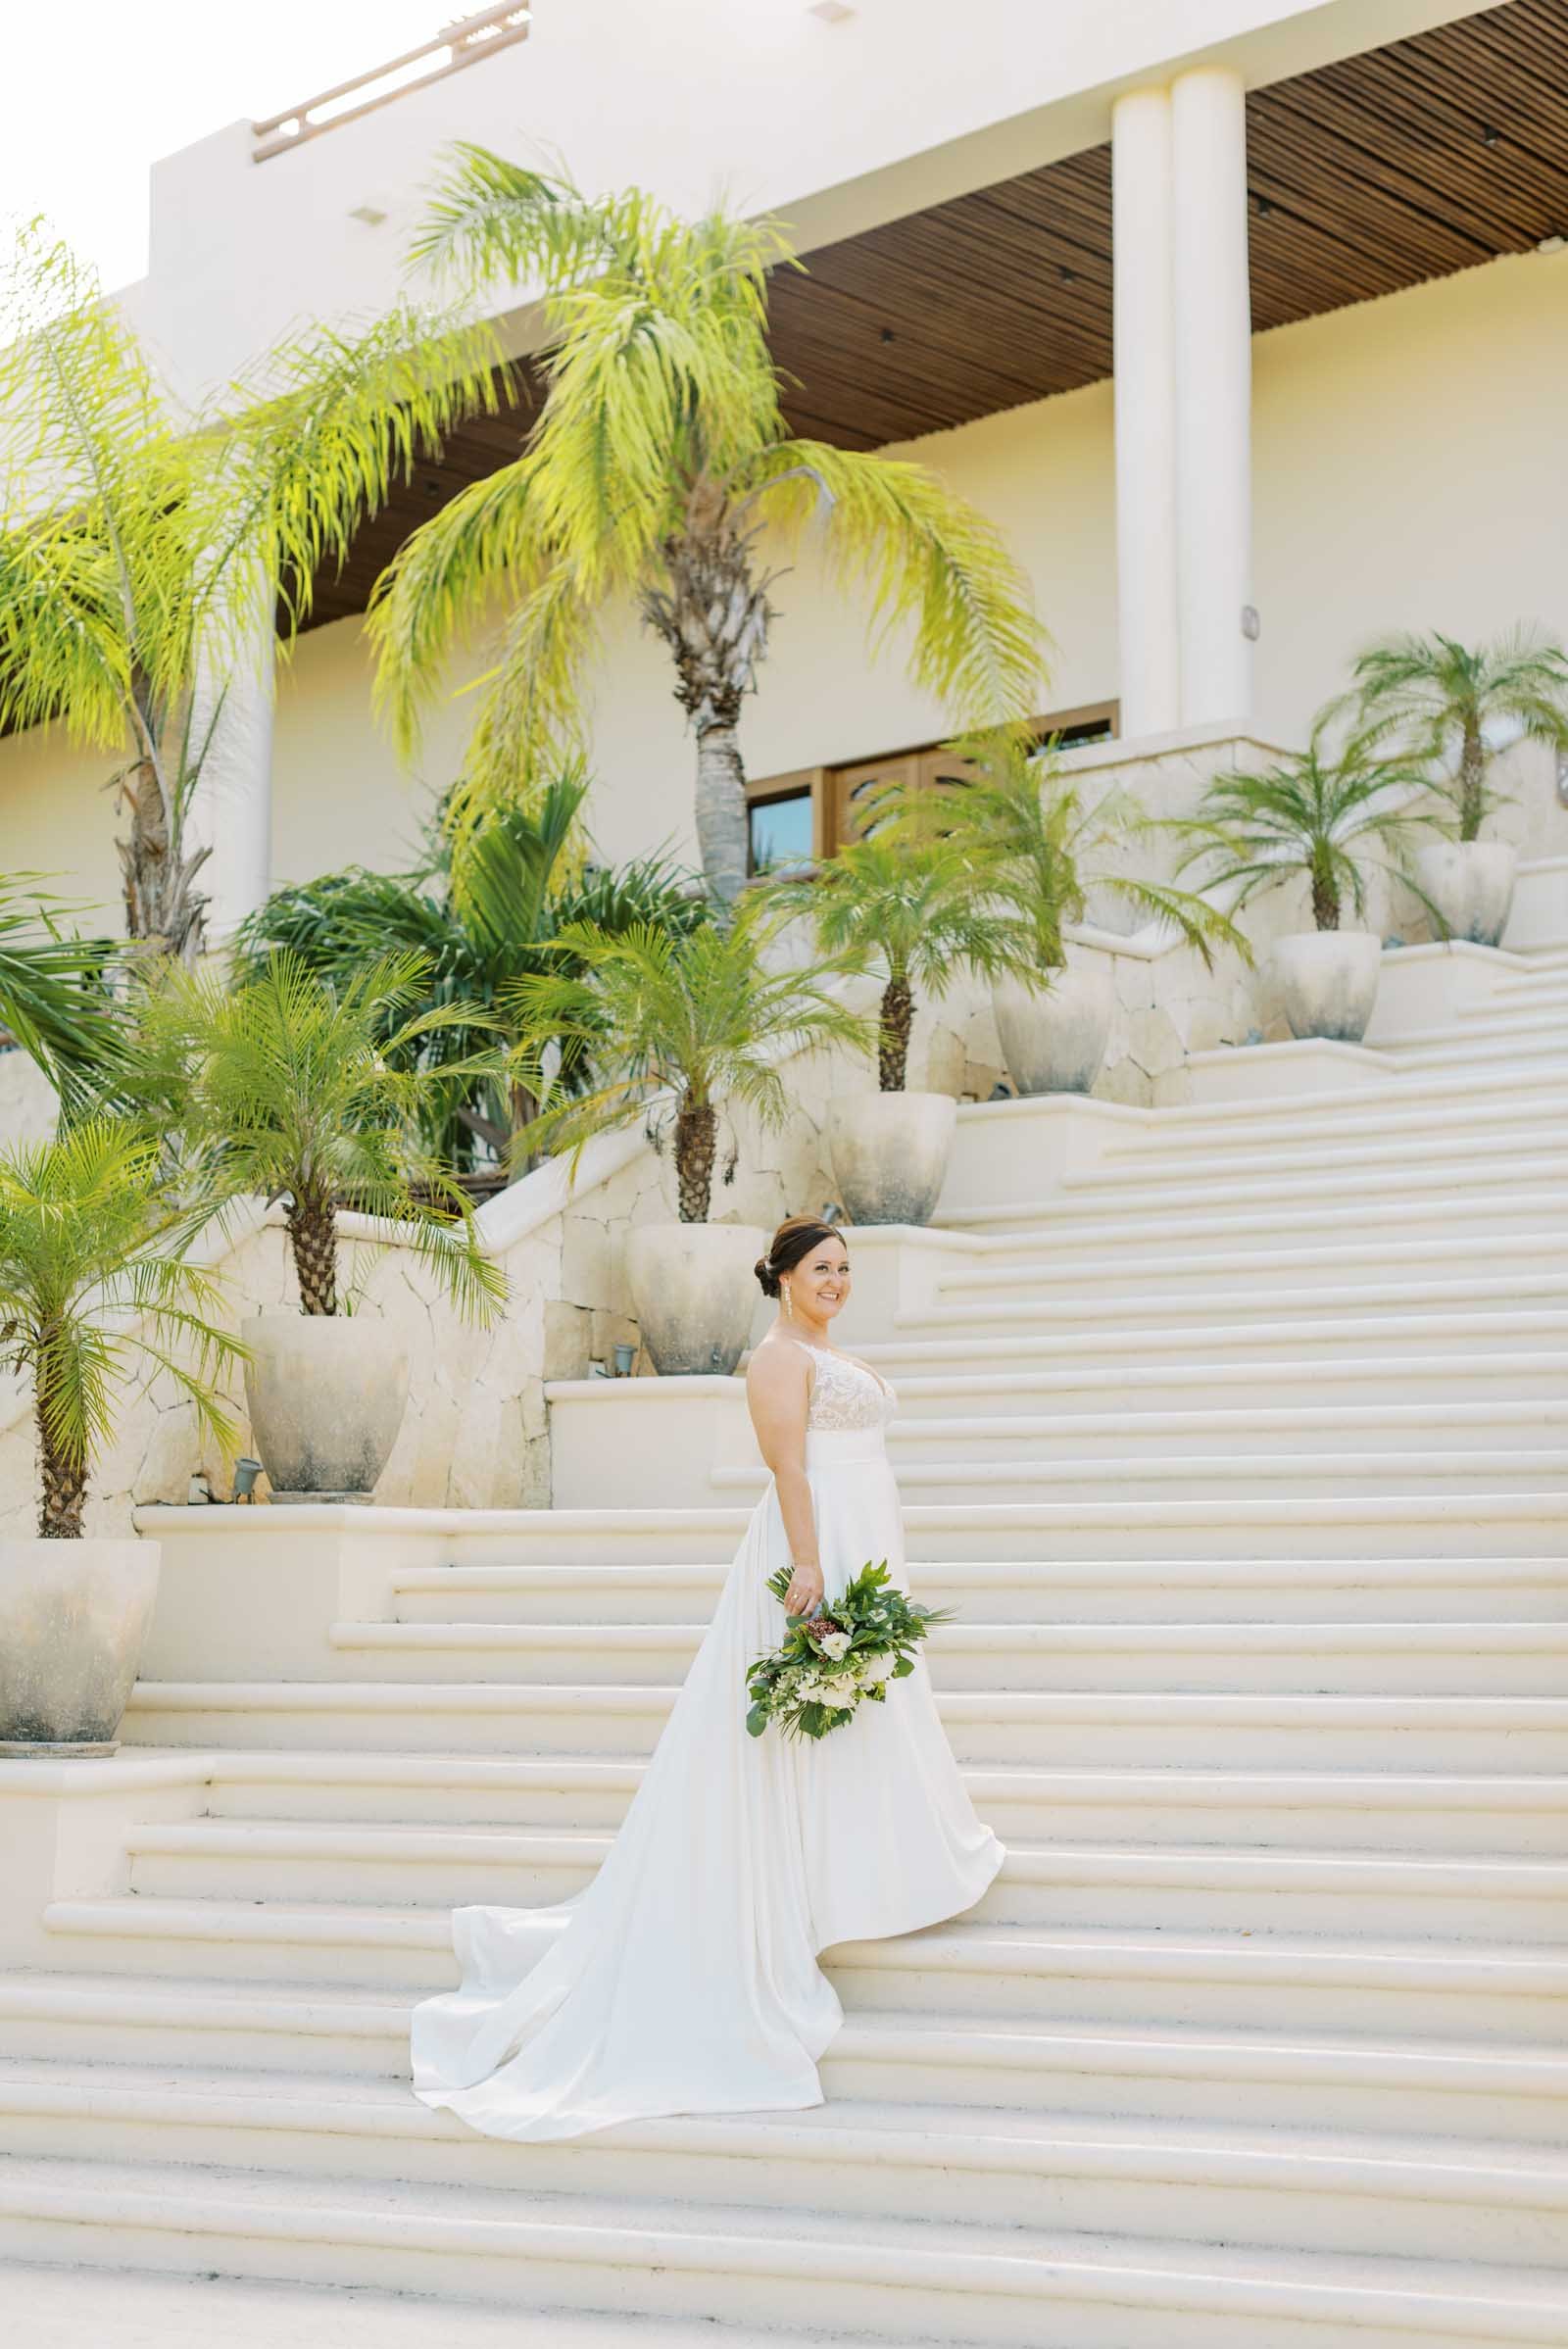 Markie Walden Photo Cancun Mexico Wedding (9 of 20).jpg